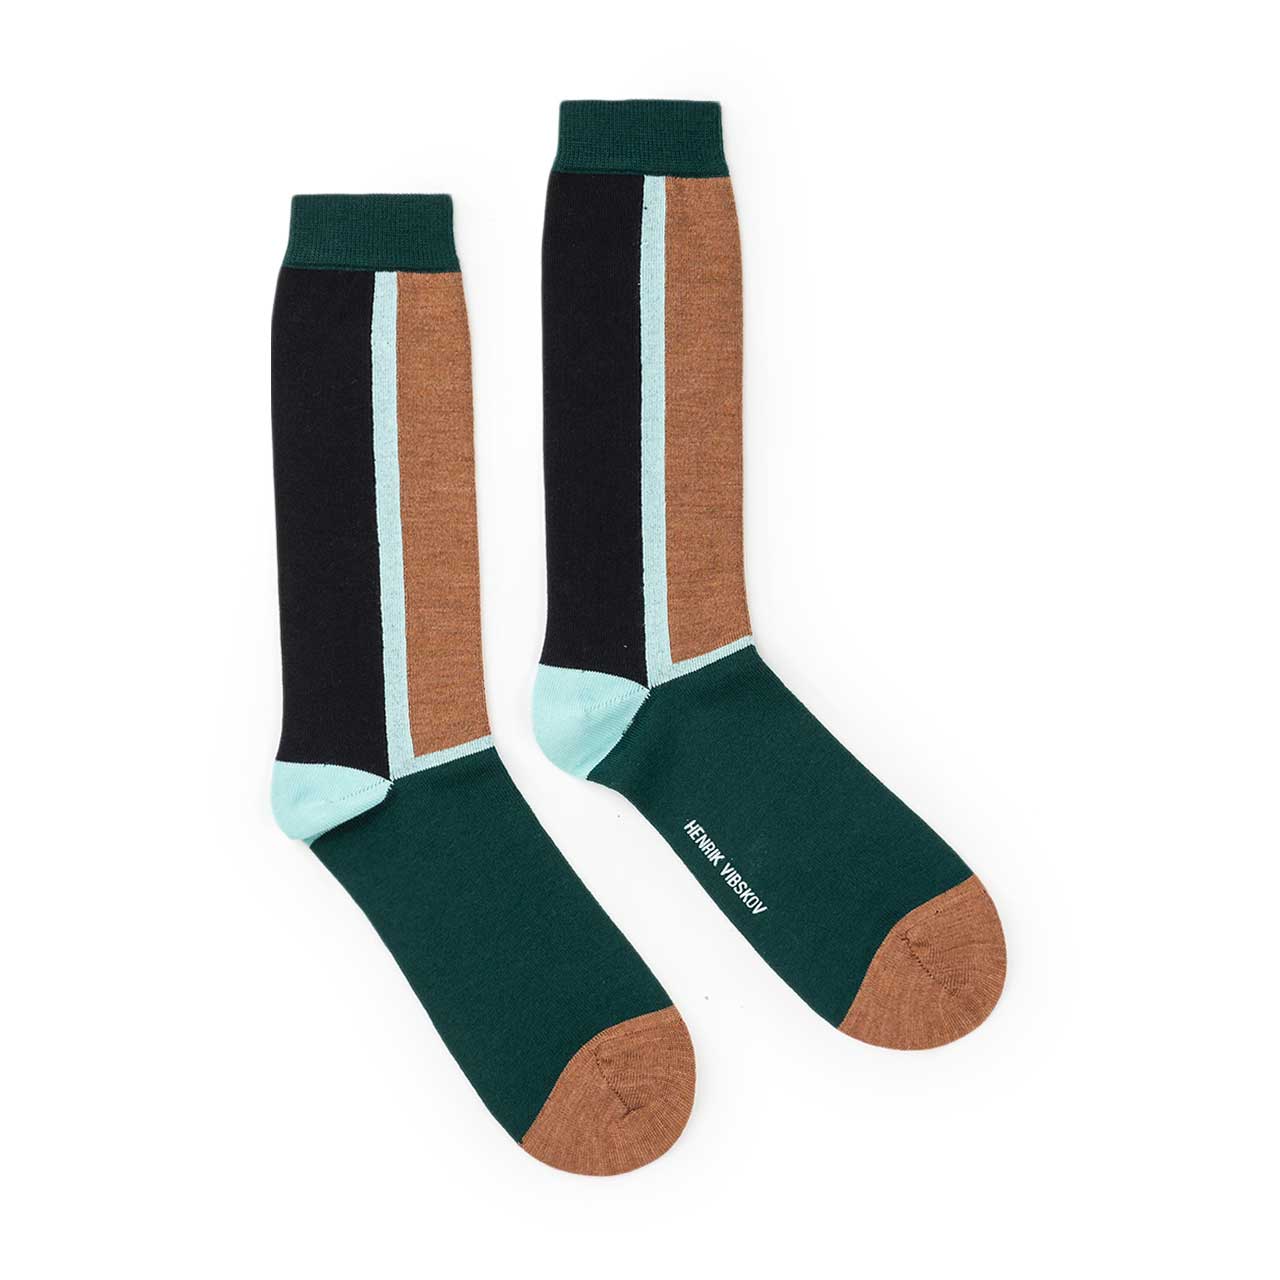 henrik vibskov block socks (brown) - aw20-s113 - a.plus - Image - 1